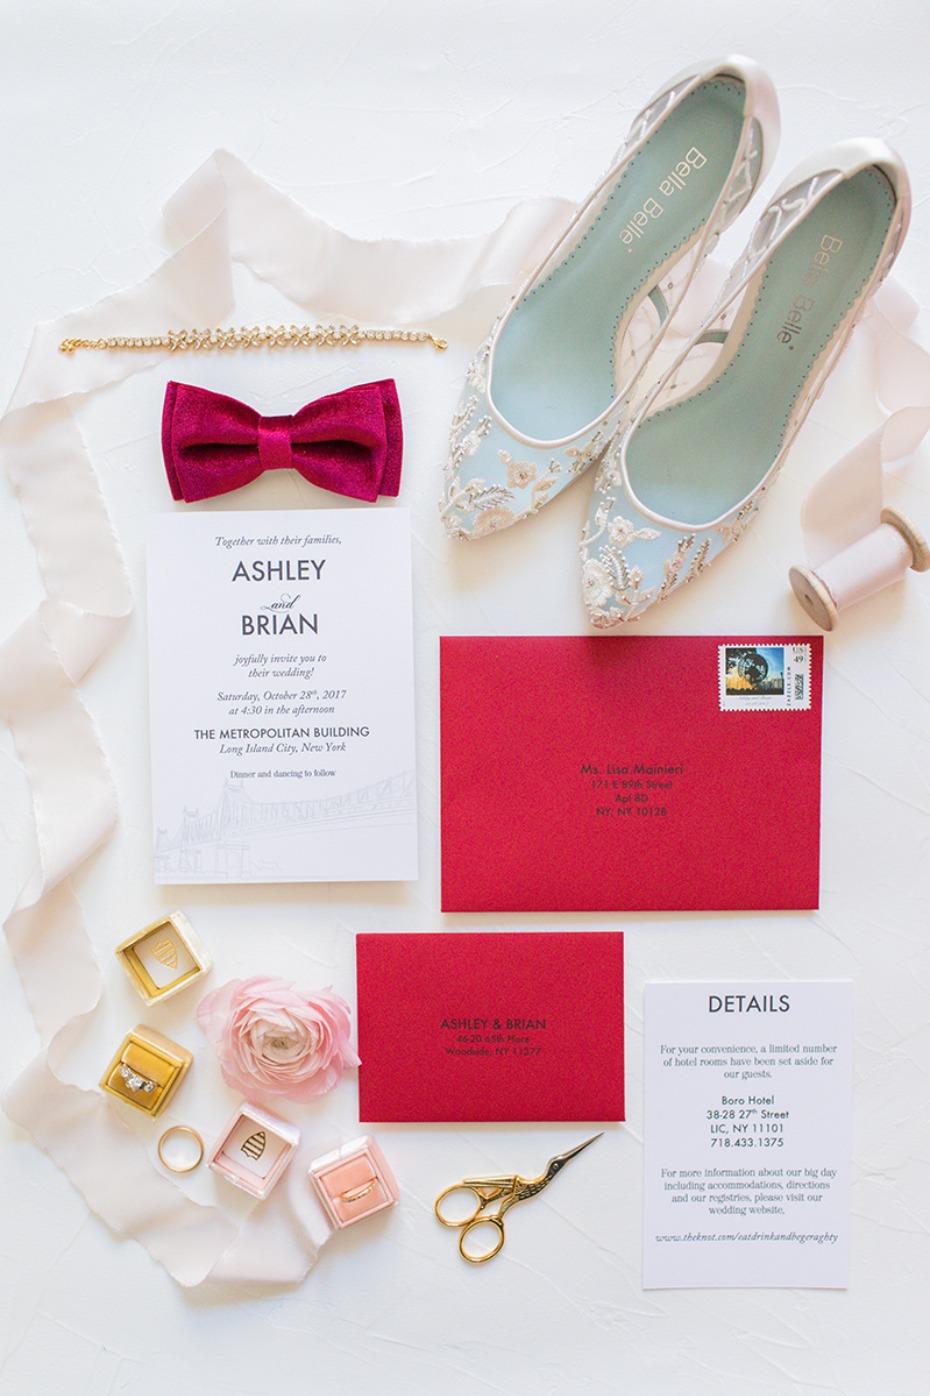 simple and elegant wedding stationery